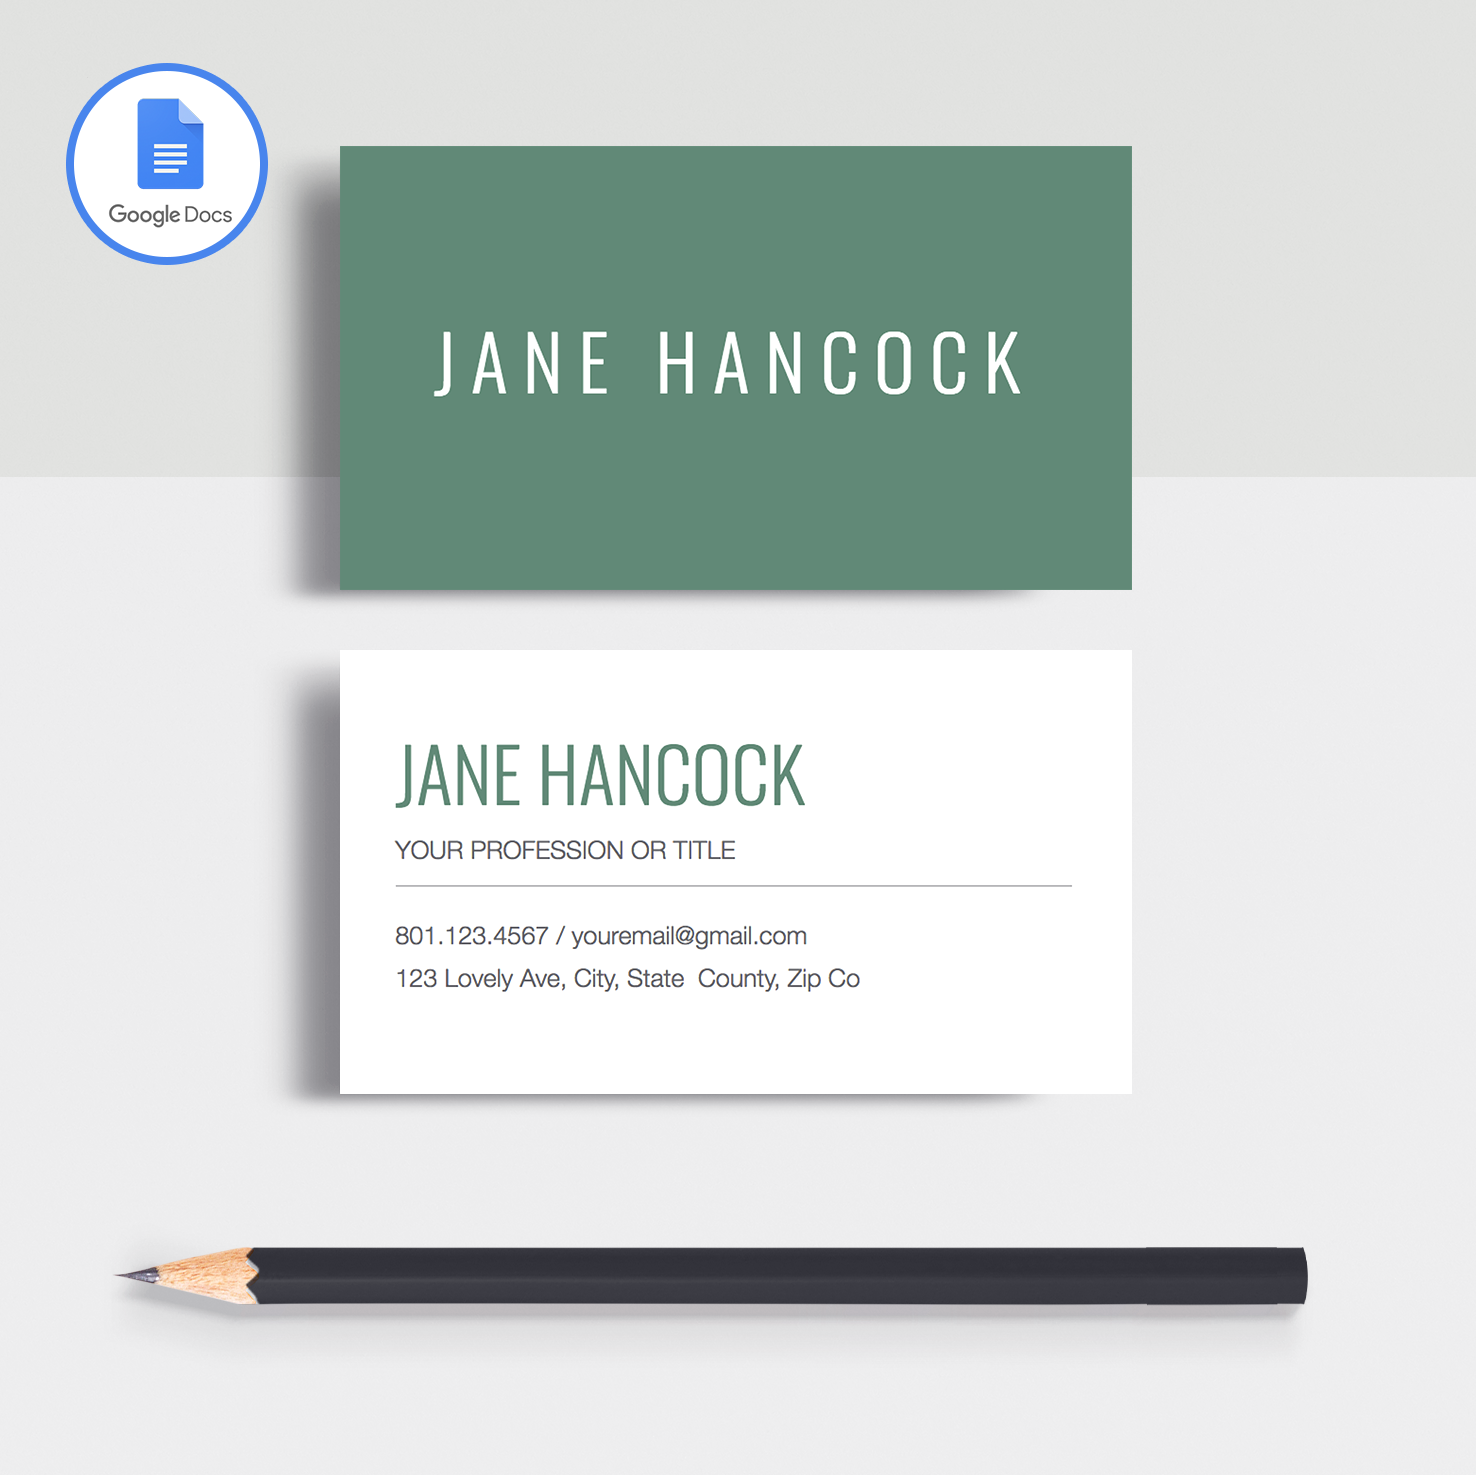 Jane Hancock | Google Docs Professional Business Cards Template - MioDocs